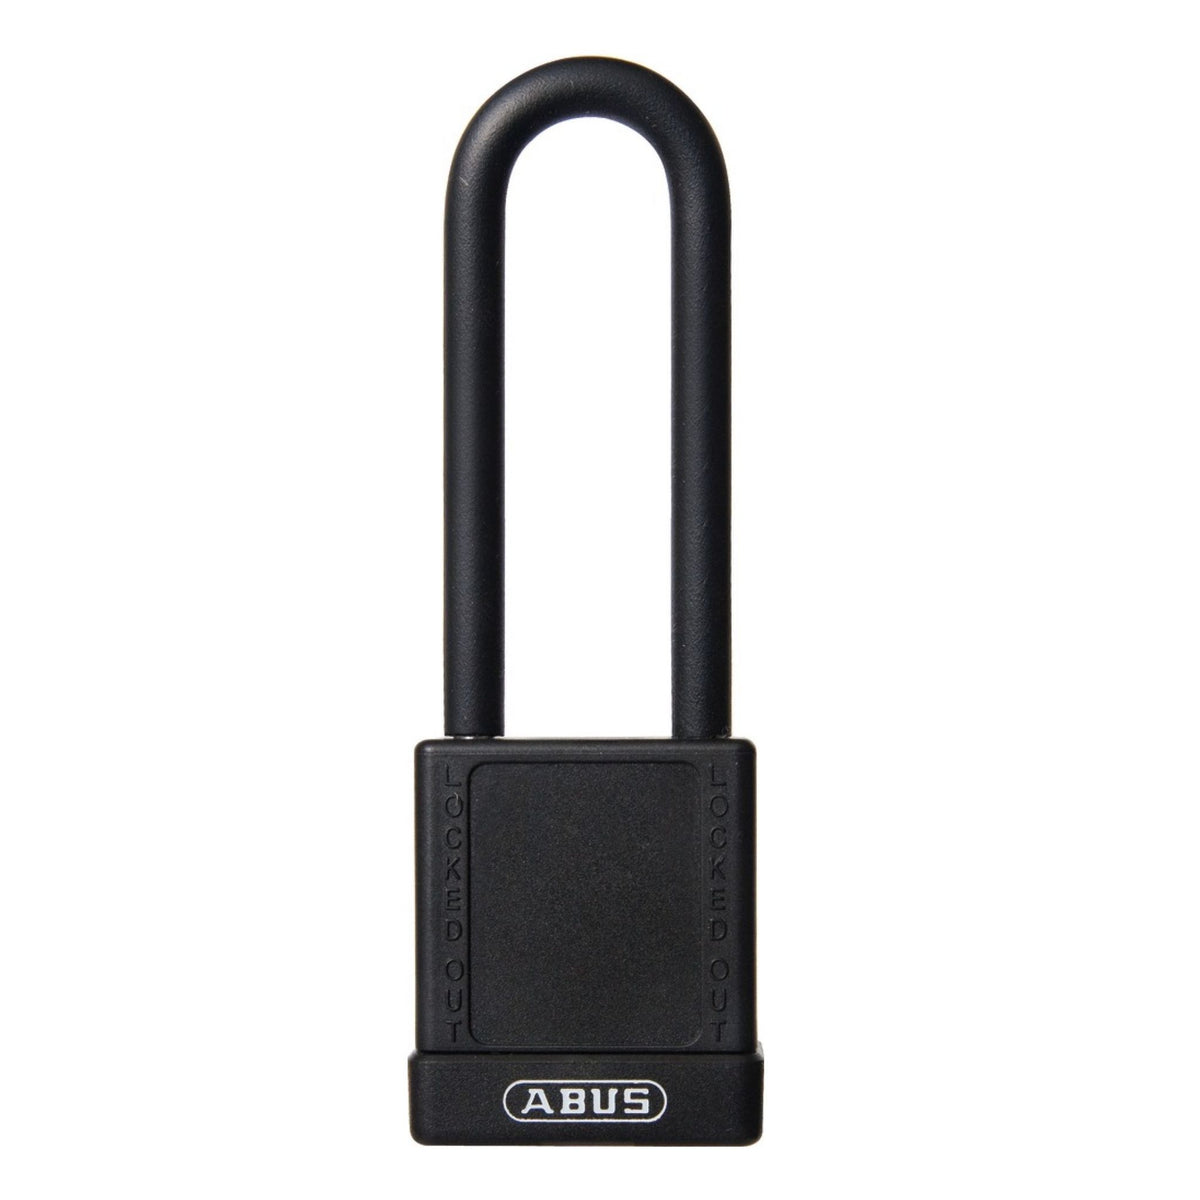 Abus 74/40HB75 MK Master Keyed Black Safety Padlock, 3-Inch Shackle - The Lock Source